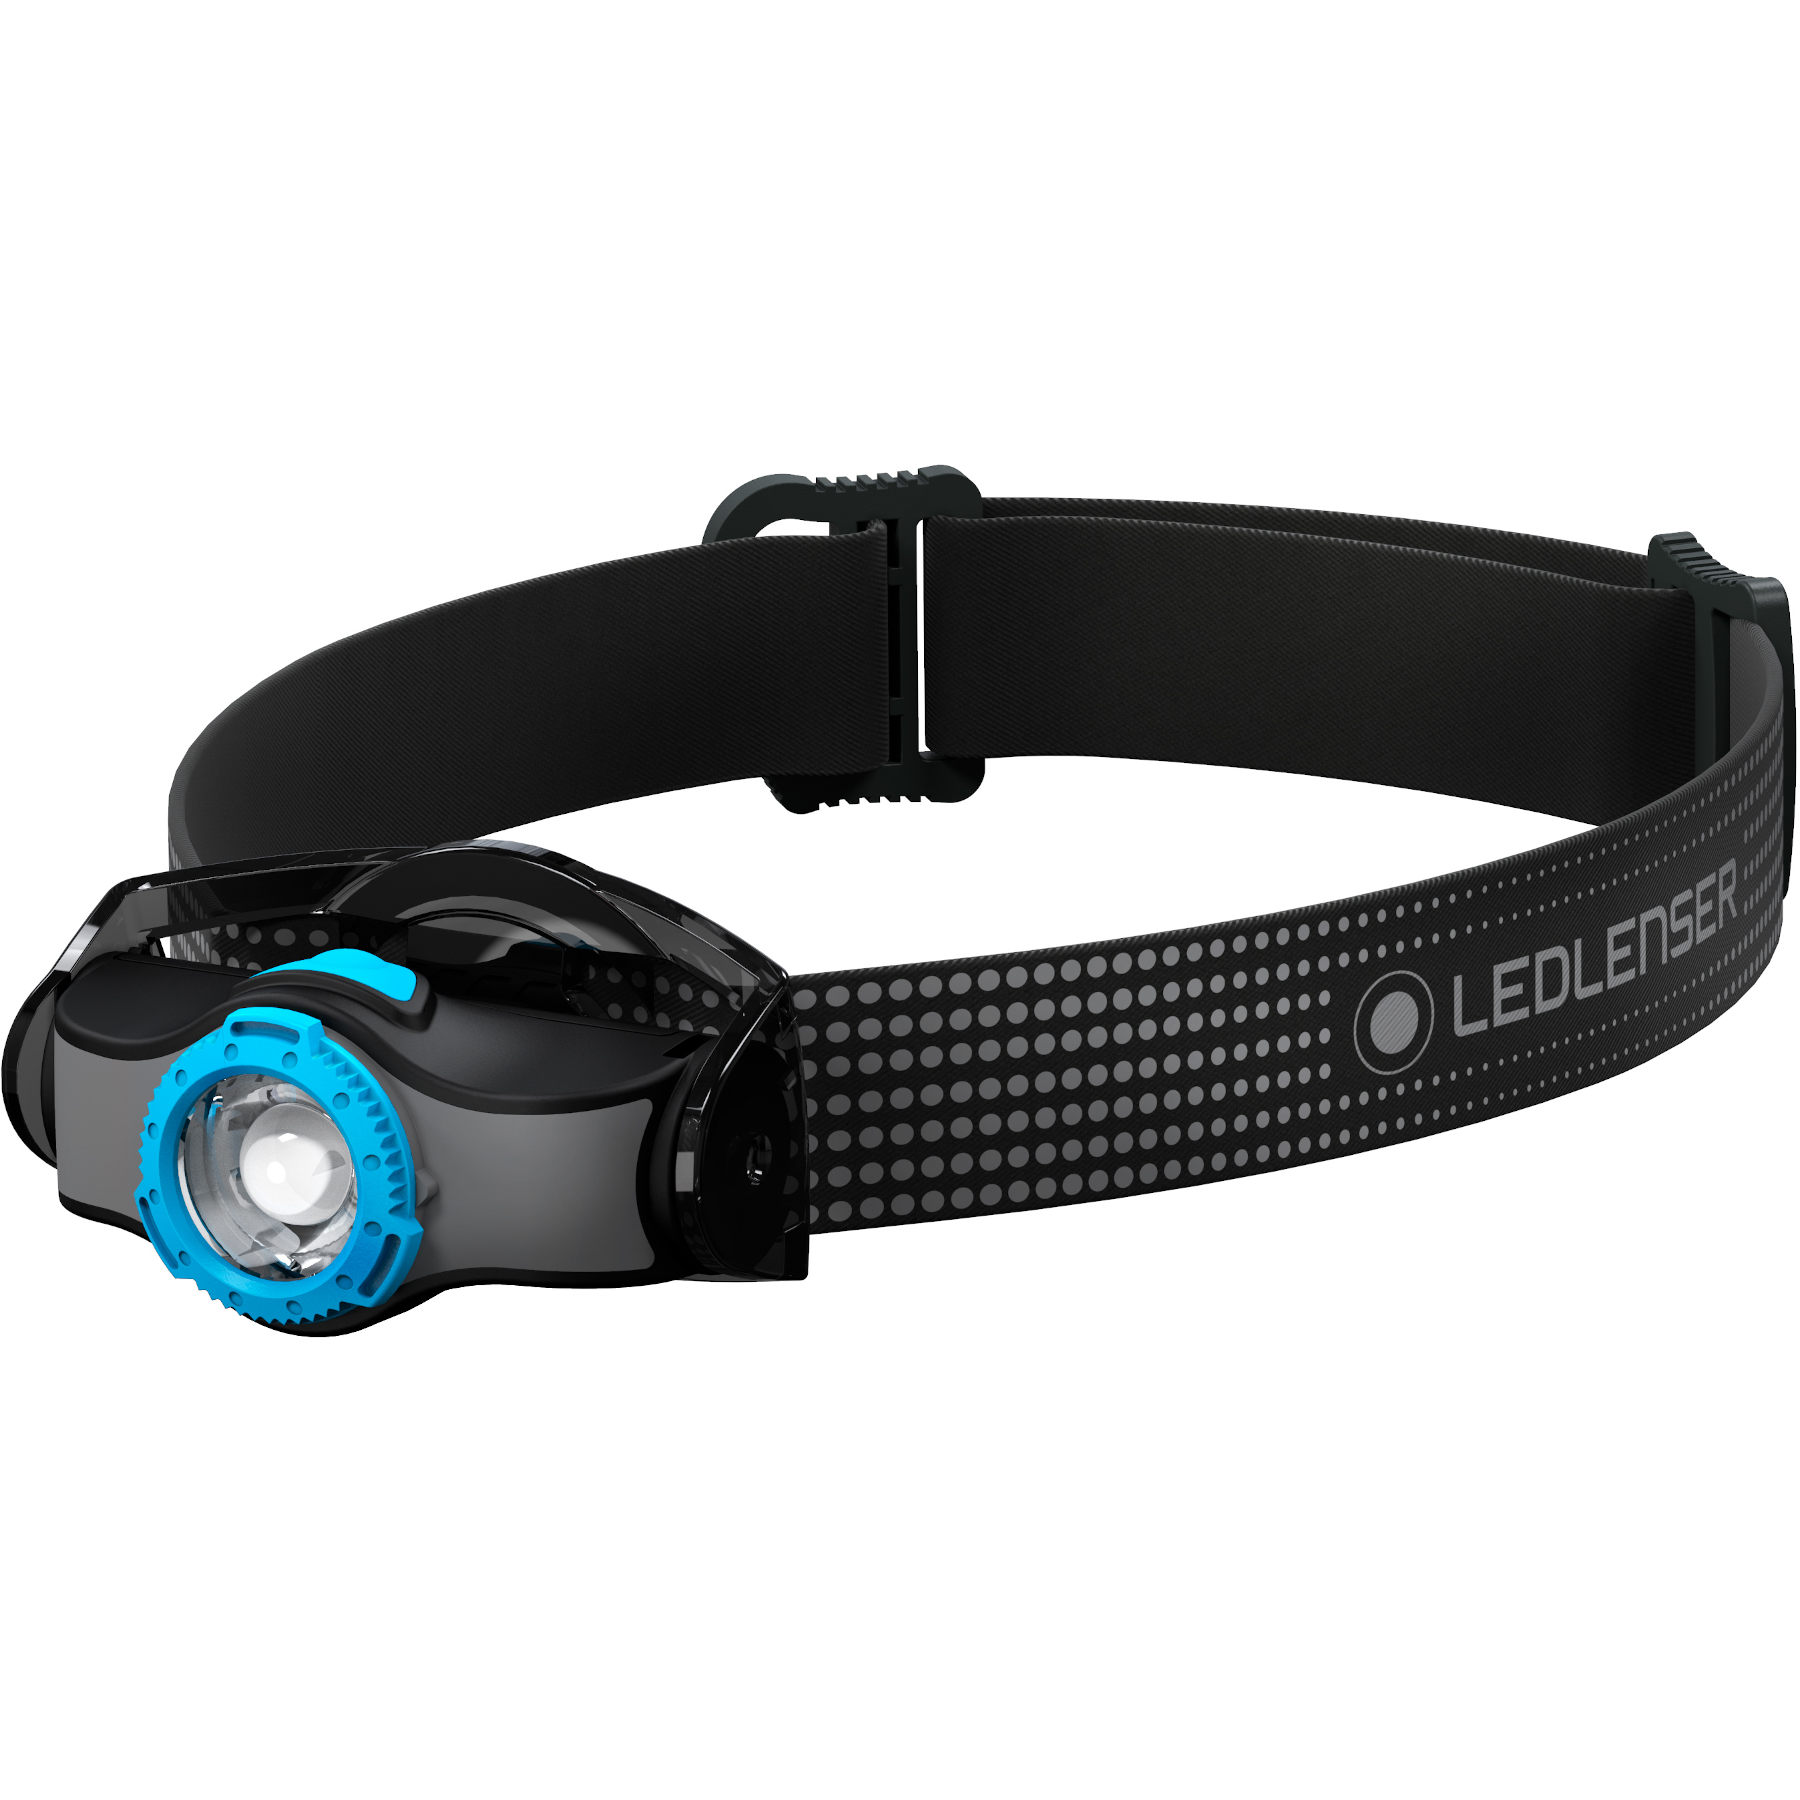 Productfoto van LEDLENSER MH3 Headlamp - Black/Blue